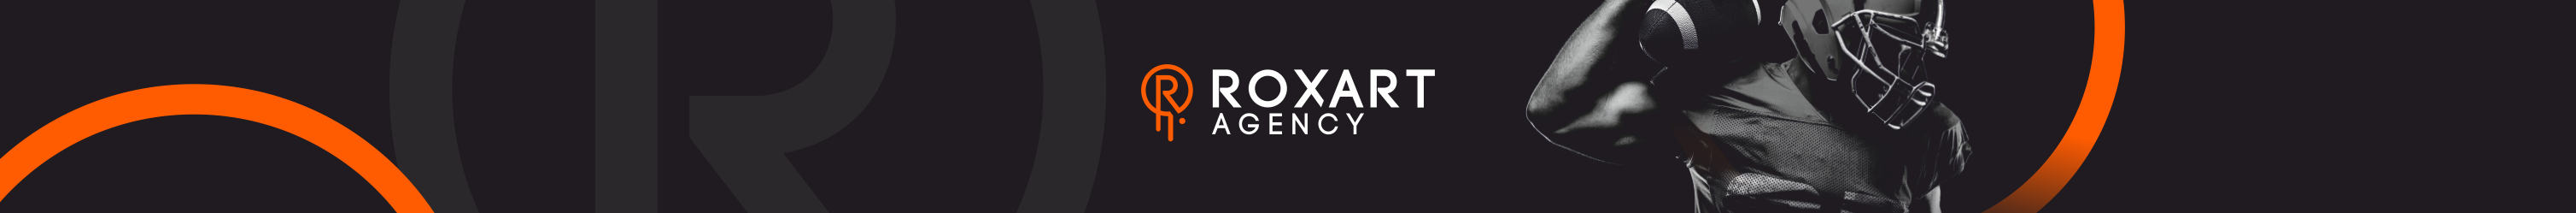 ROXART Agency's profile banner